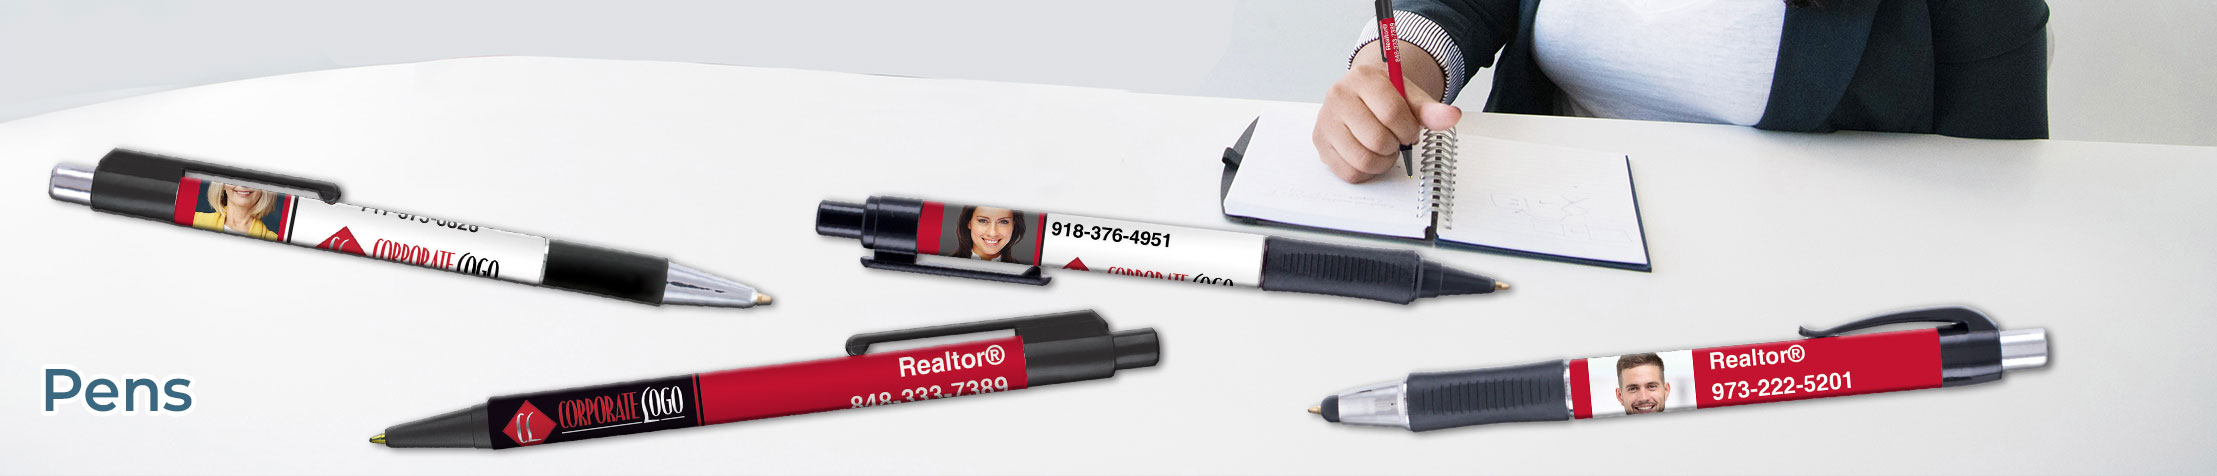 HomeSmart Real Estate Pens - HomeSmart Real Estate  personalized realtor promotional products | BestPrintBuy.com